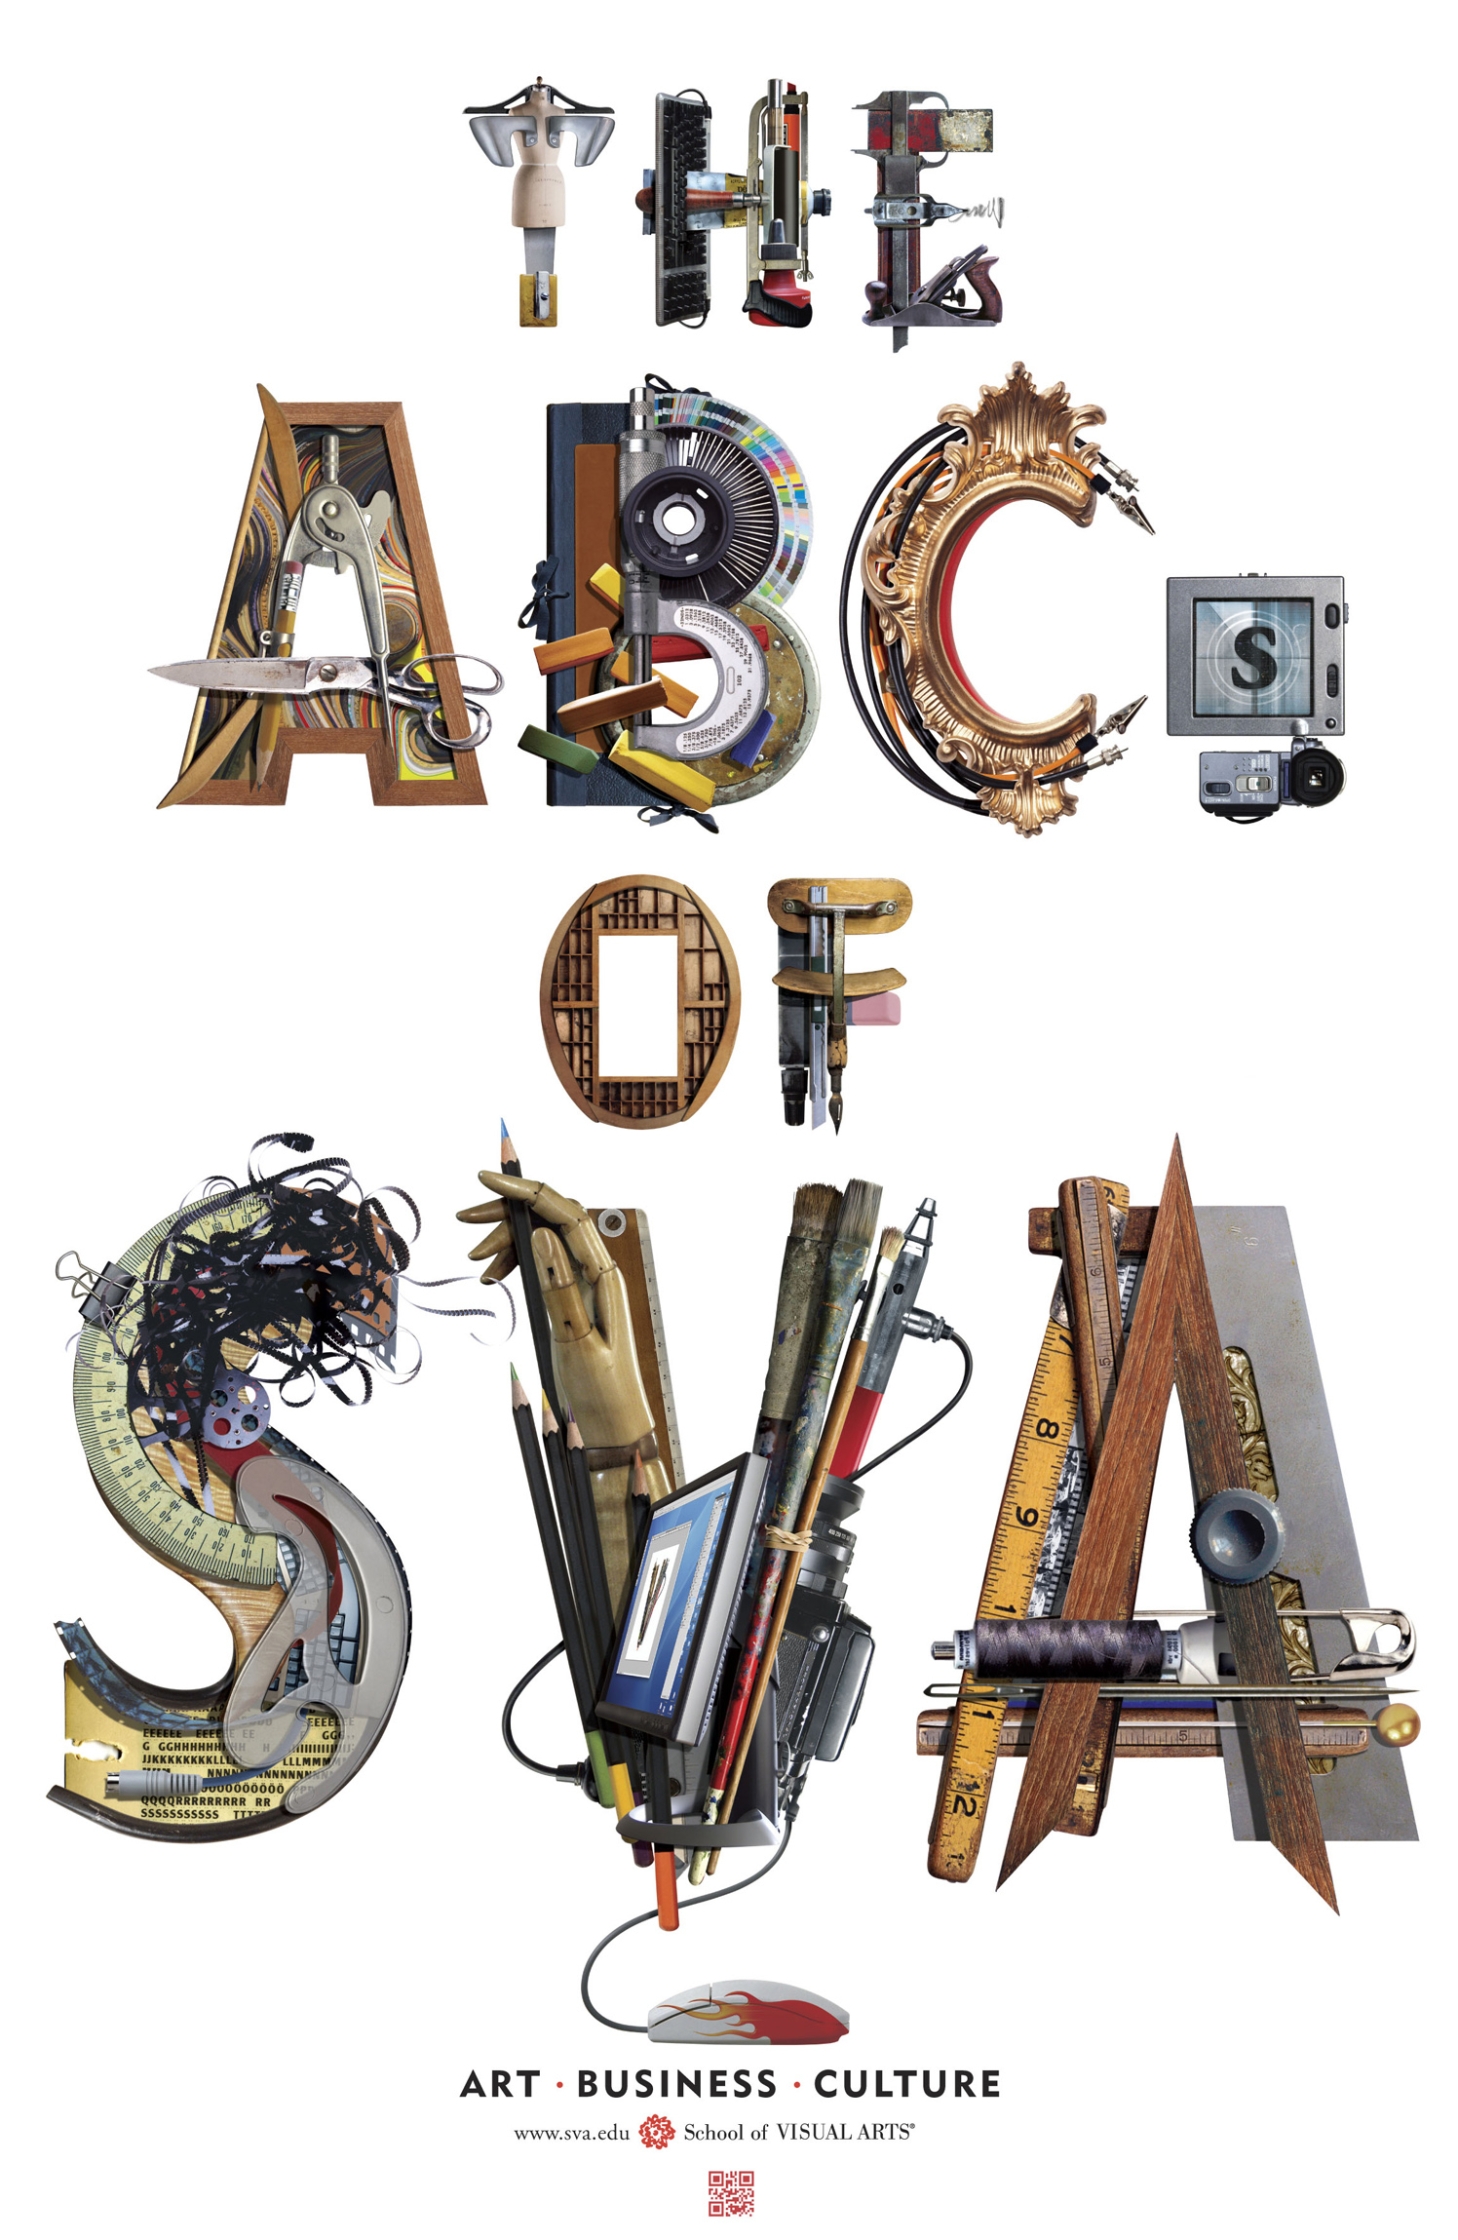 The ABC's of SVA / School of Visual Arts